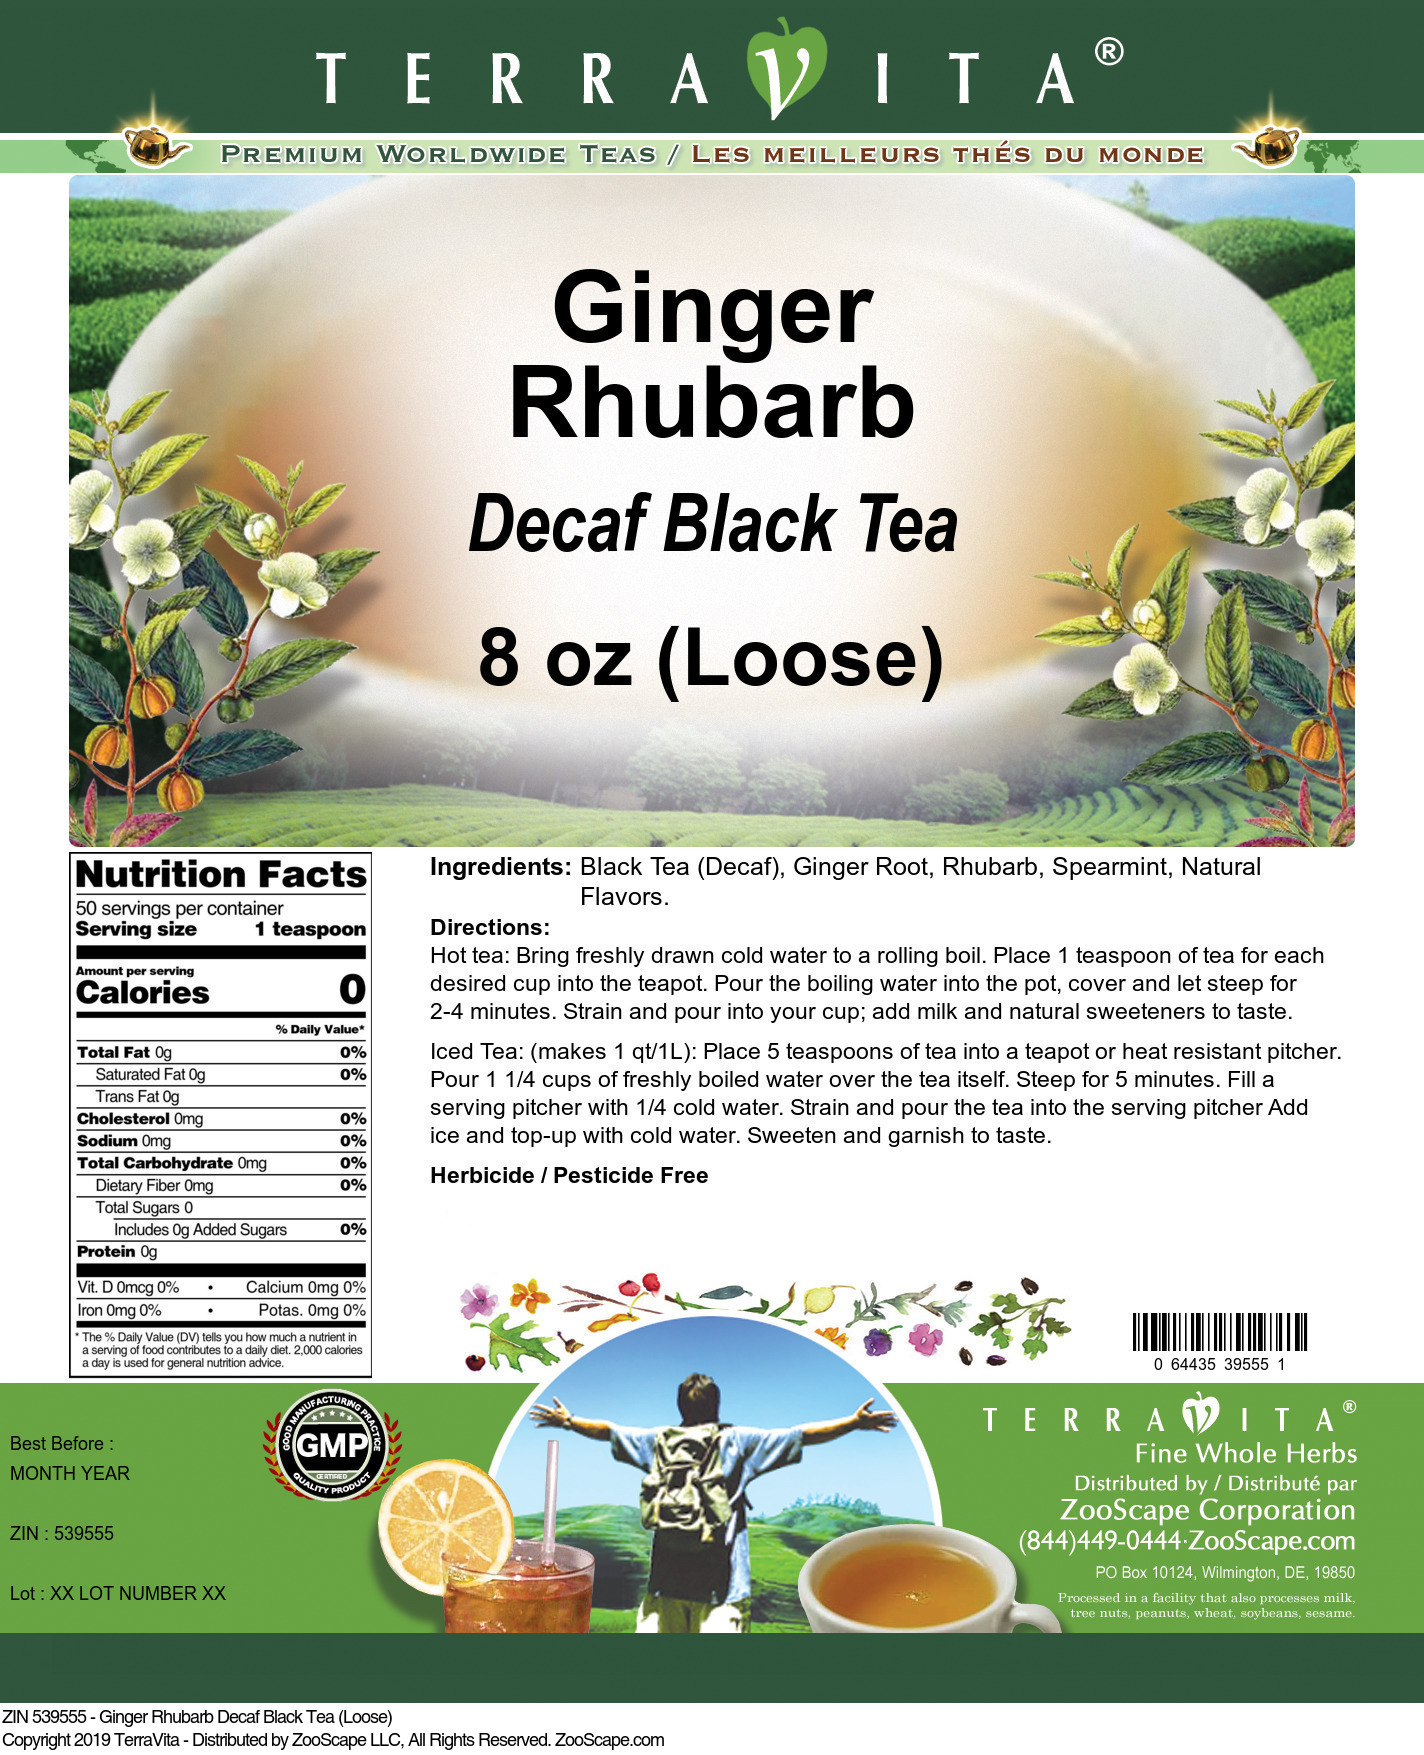 Ginger Rhubarb Decaf Black Tea (Loose) - Label